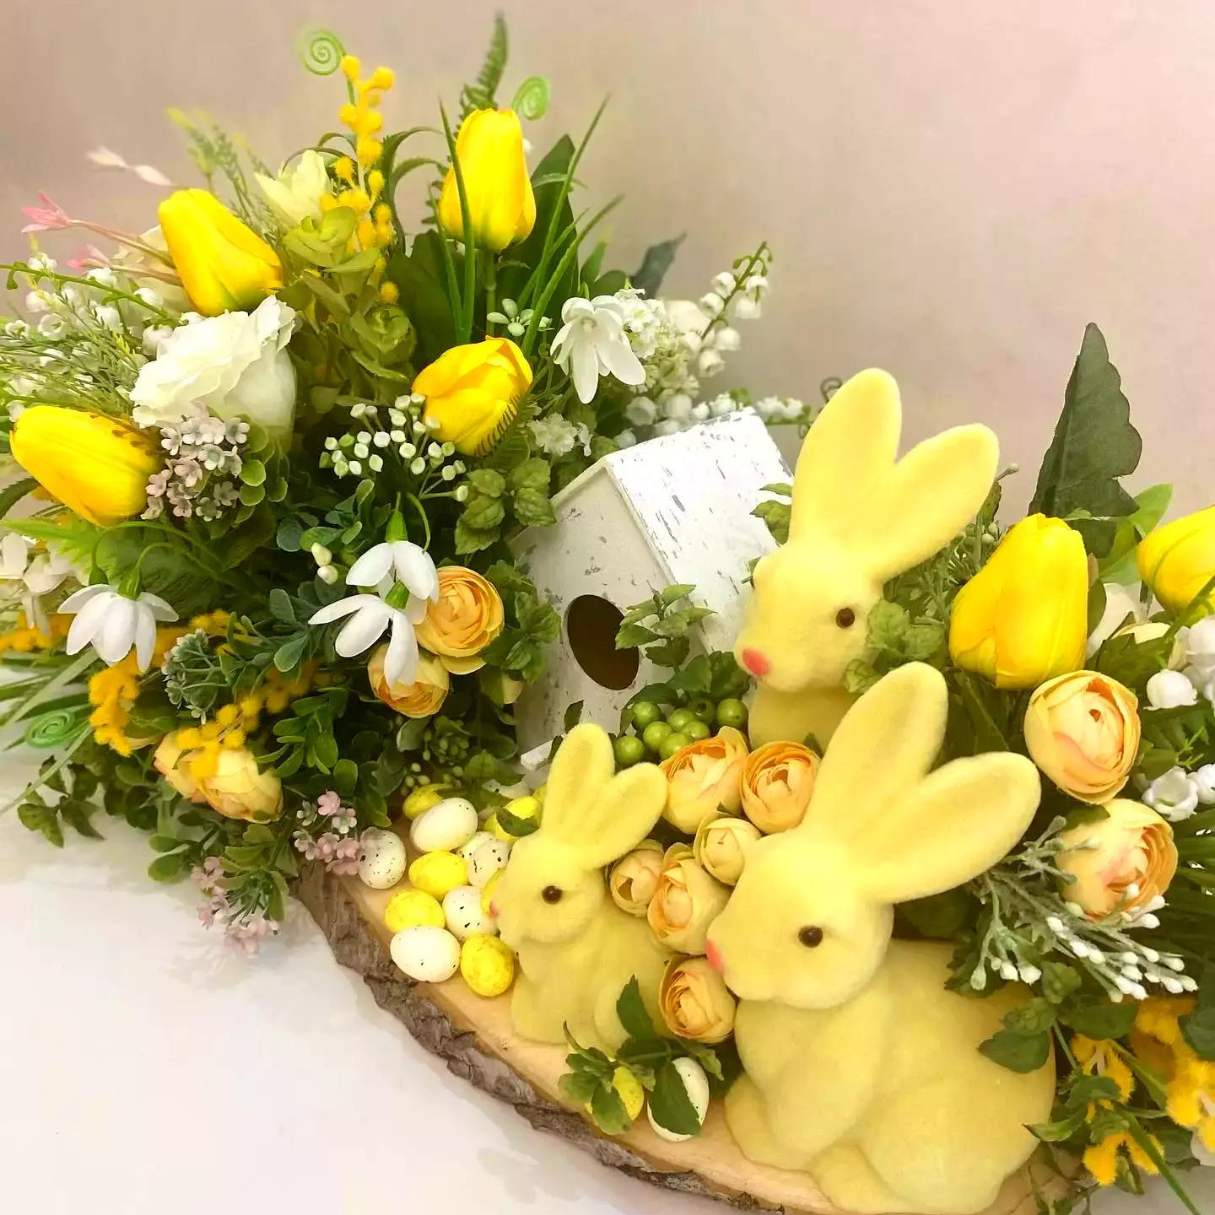 How To Make Easter Floral Arrangements